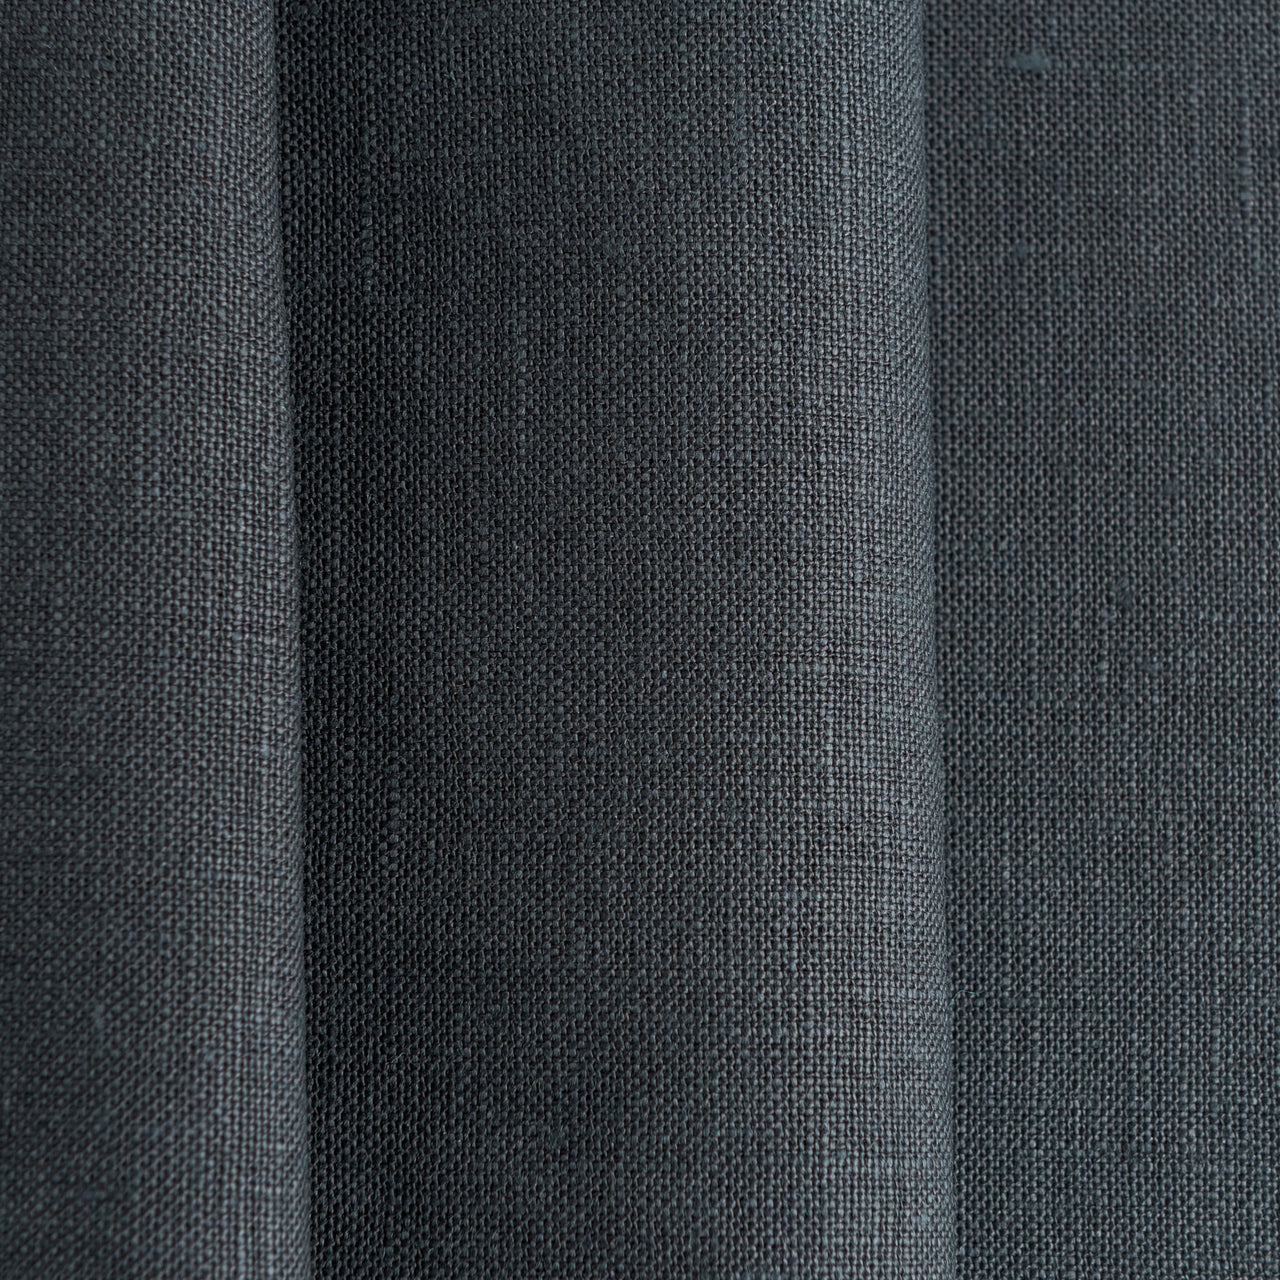 Charcoal Grey Linen Rod Pocket Curtain Panel - Custom Sizes & Colors